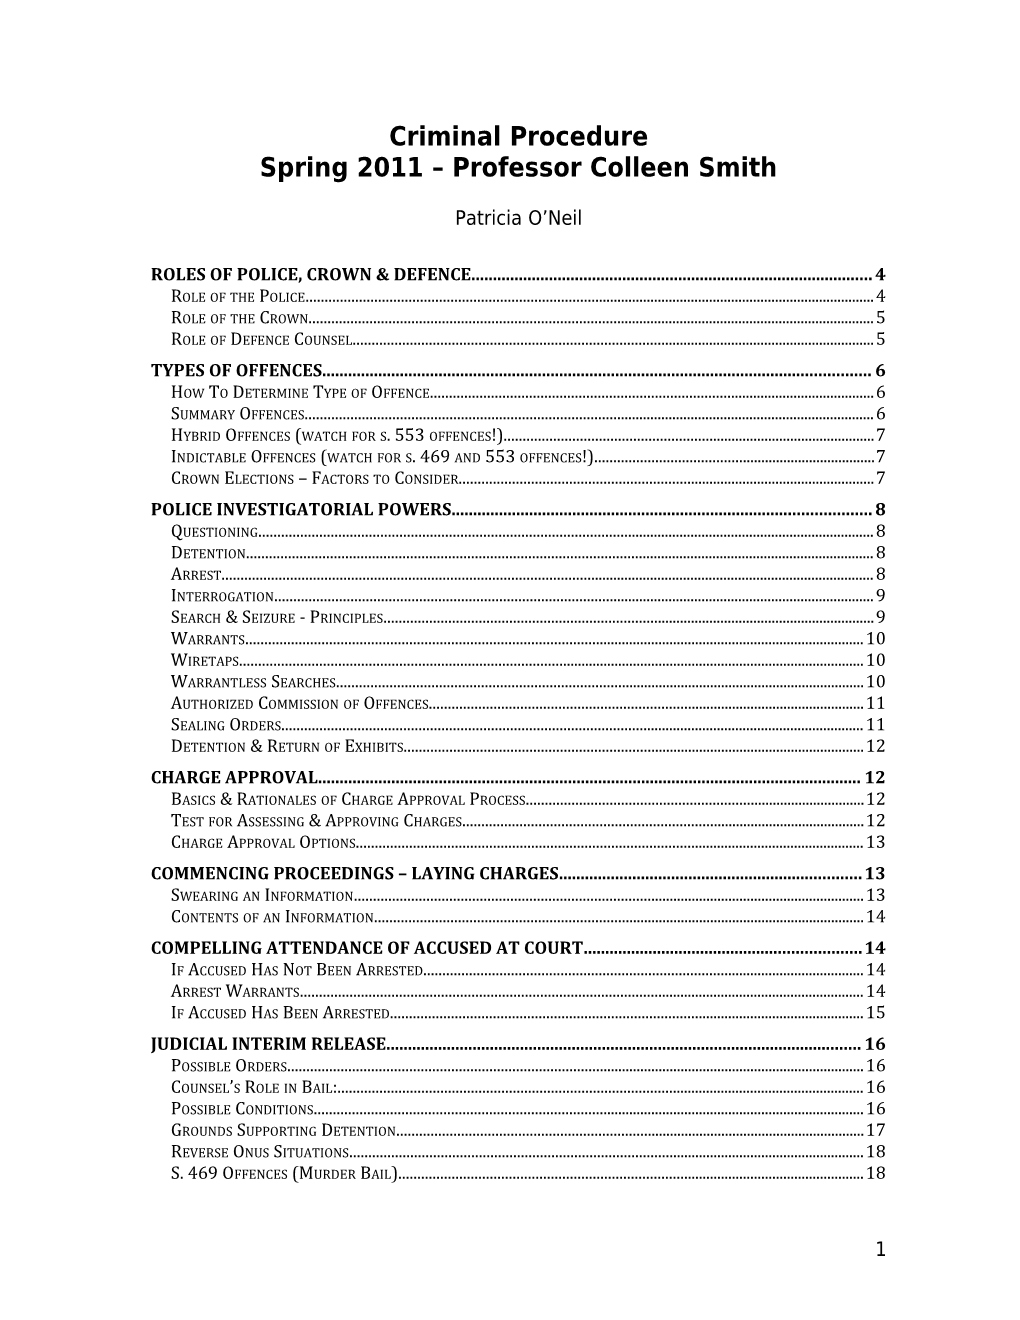 Spring 2011 Professor Colleen Smith